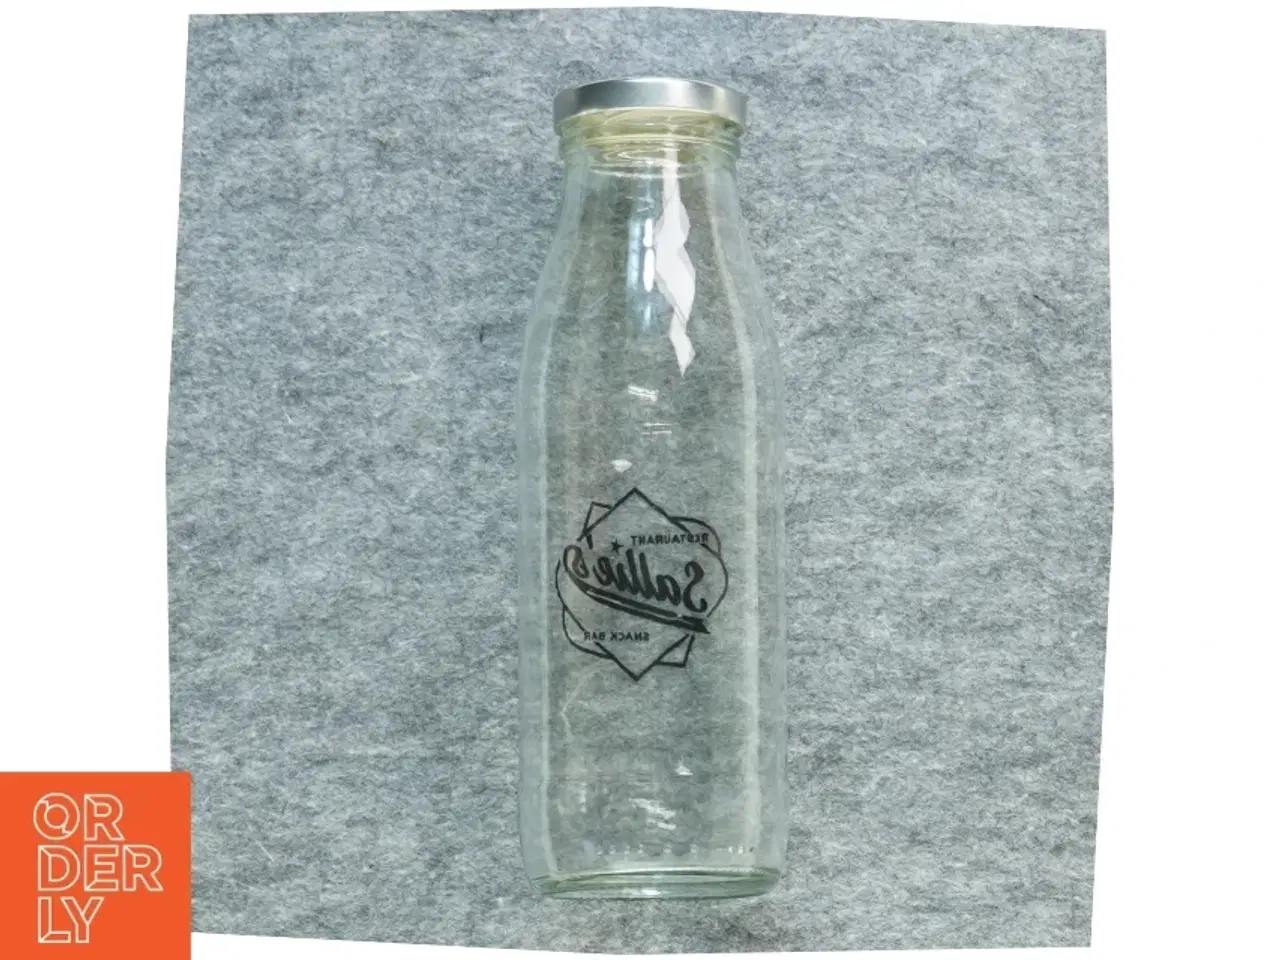 Billede 2 - Flaske fra Restaurant Sallis Snackbar (str. 20 x 6 cm)